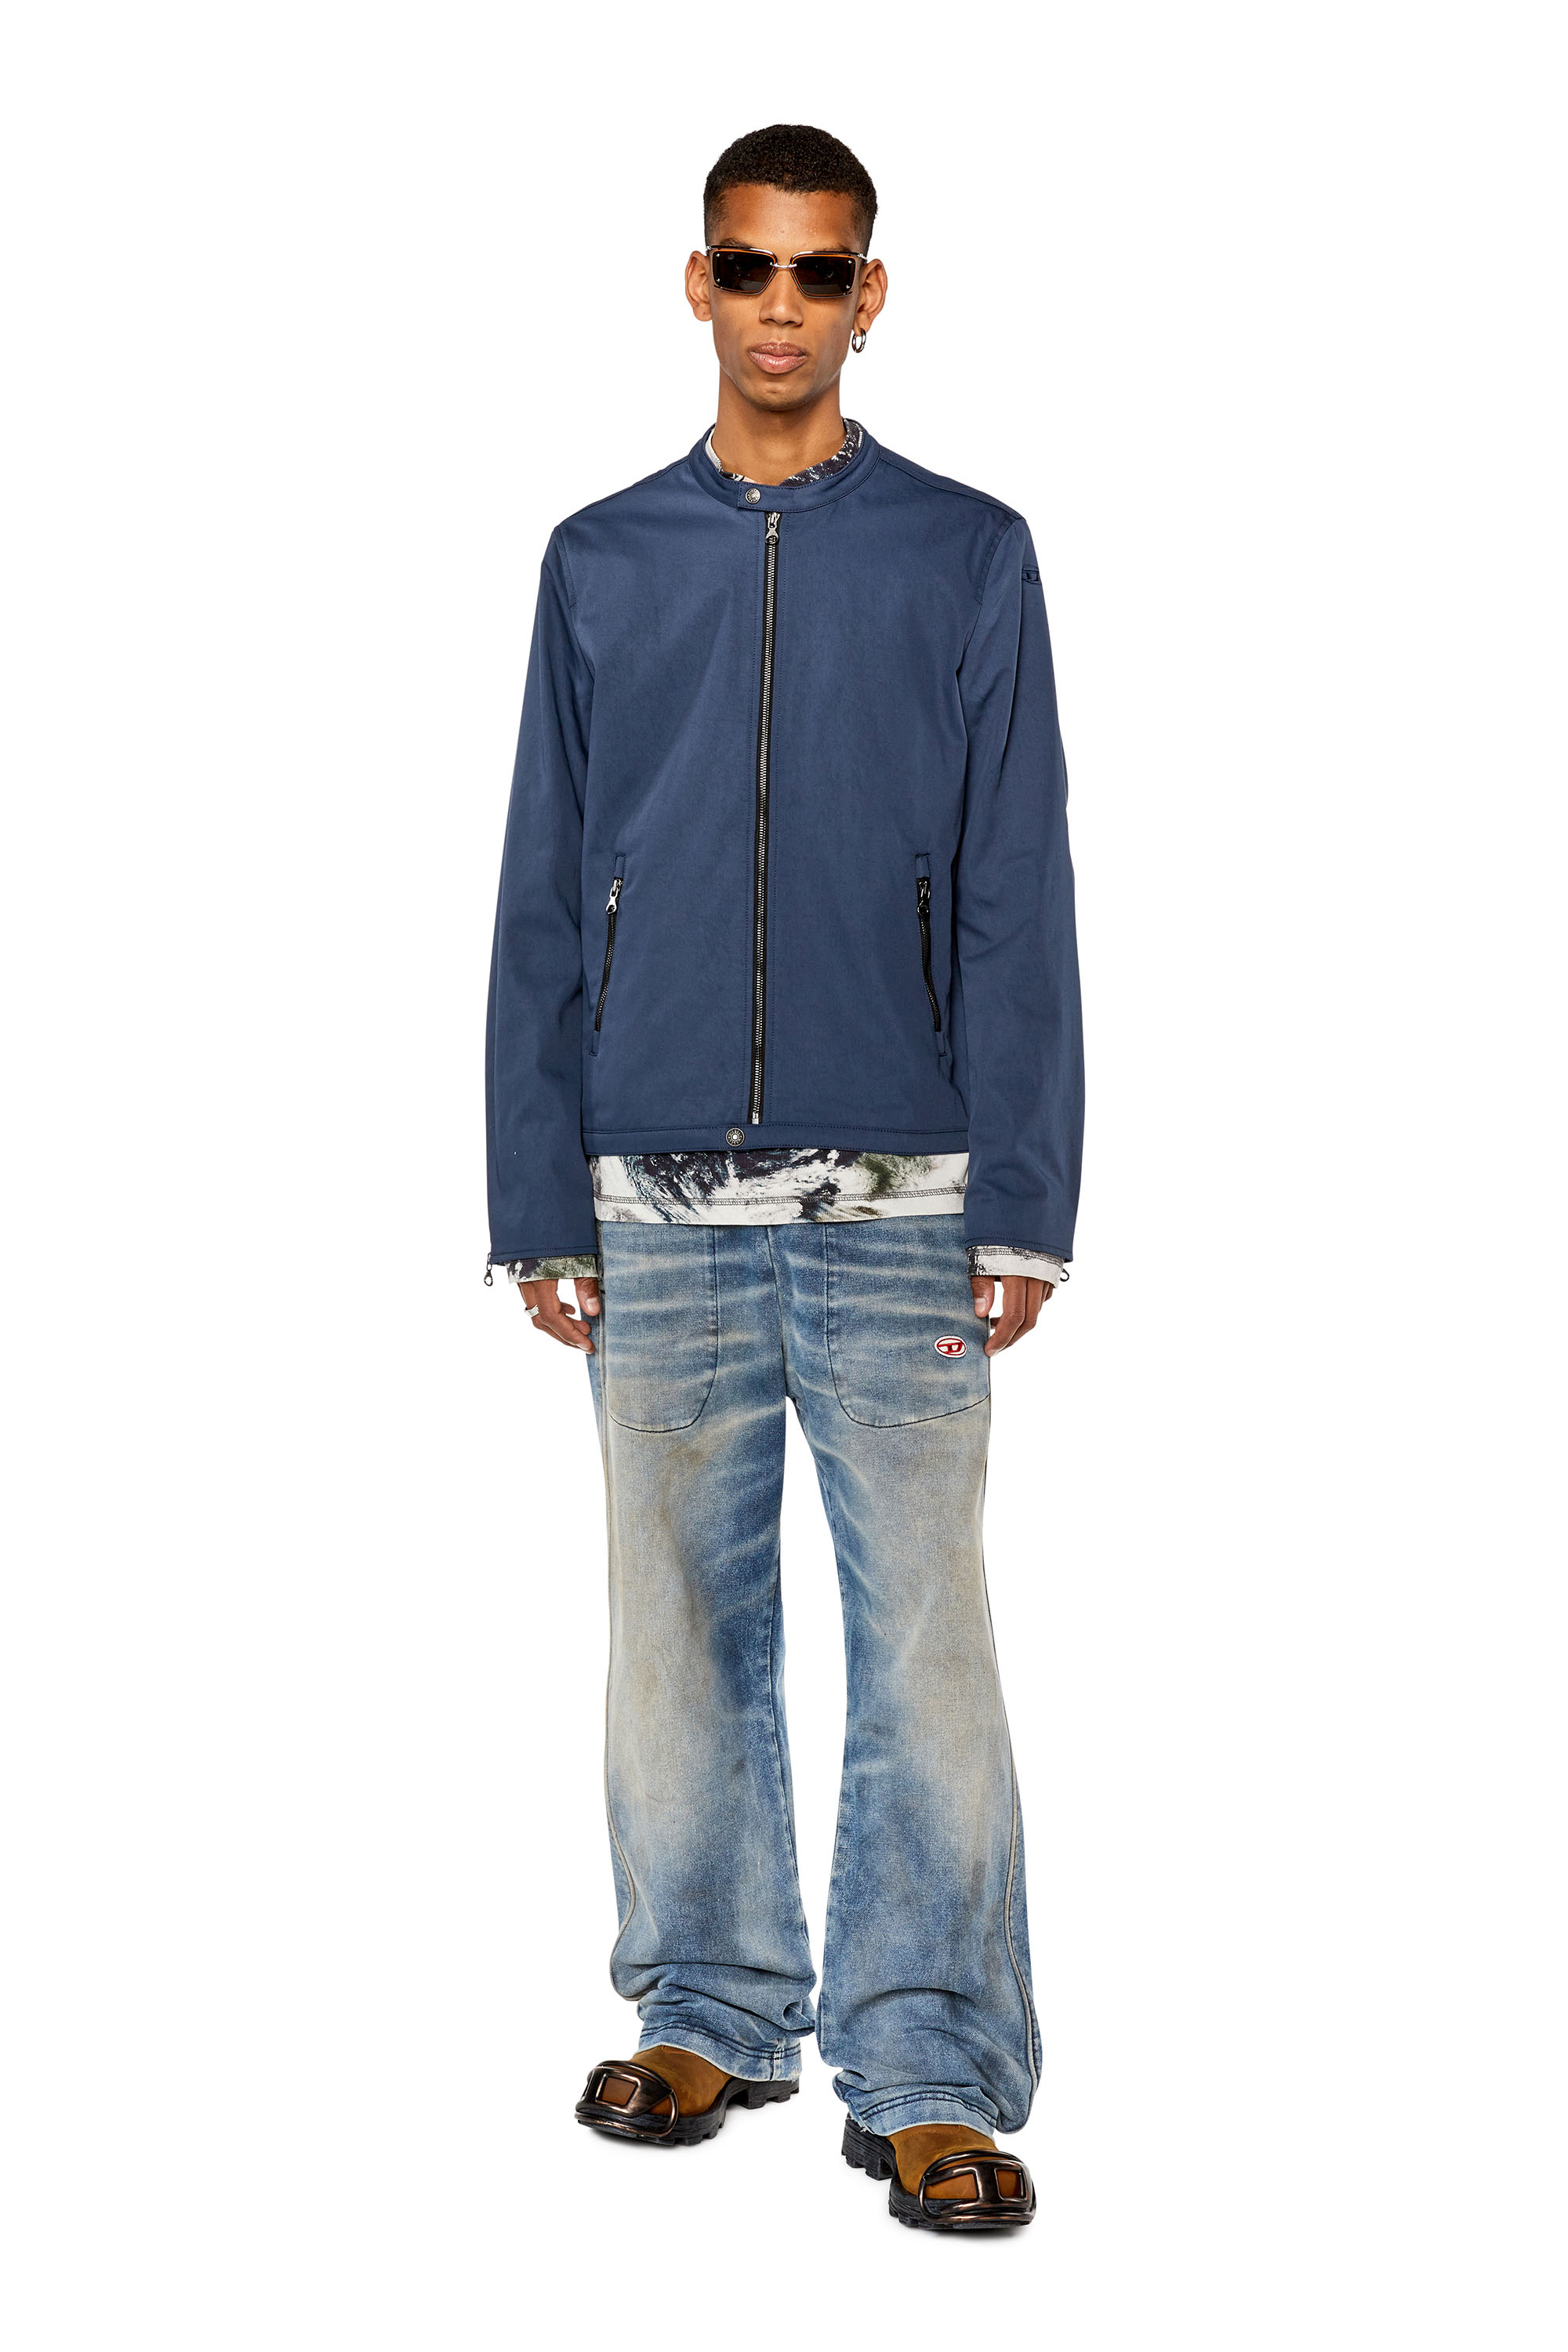 Diesel - J-GLORY-NW, Male Biker jacket in cotton-touch nylon in Blue - Image 2